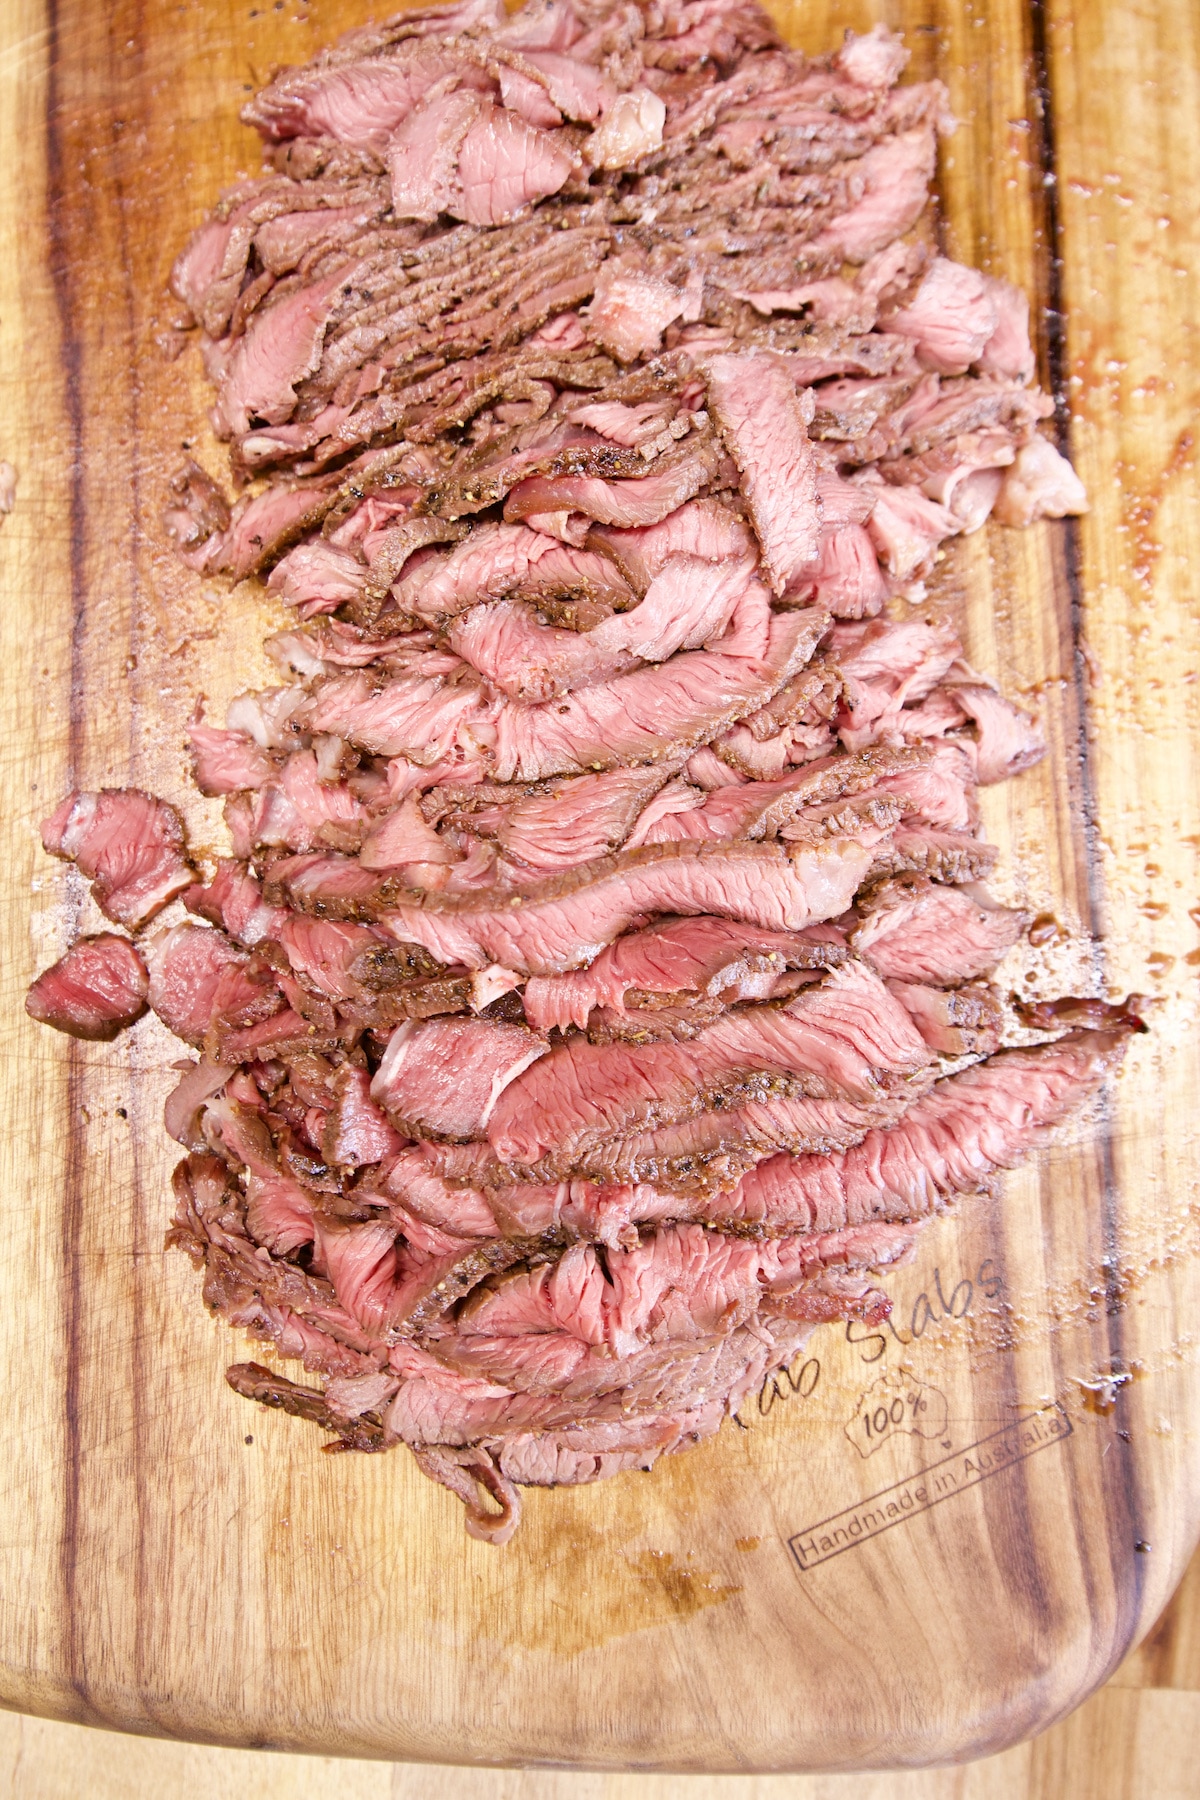 Sliced sirloin steak on a cutting board.